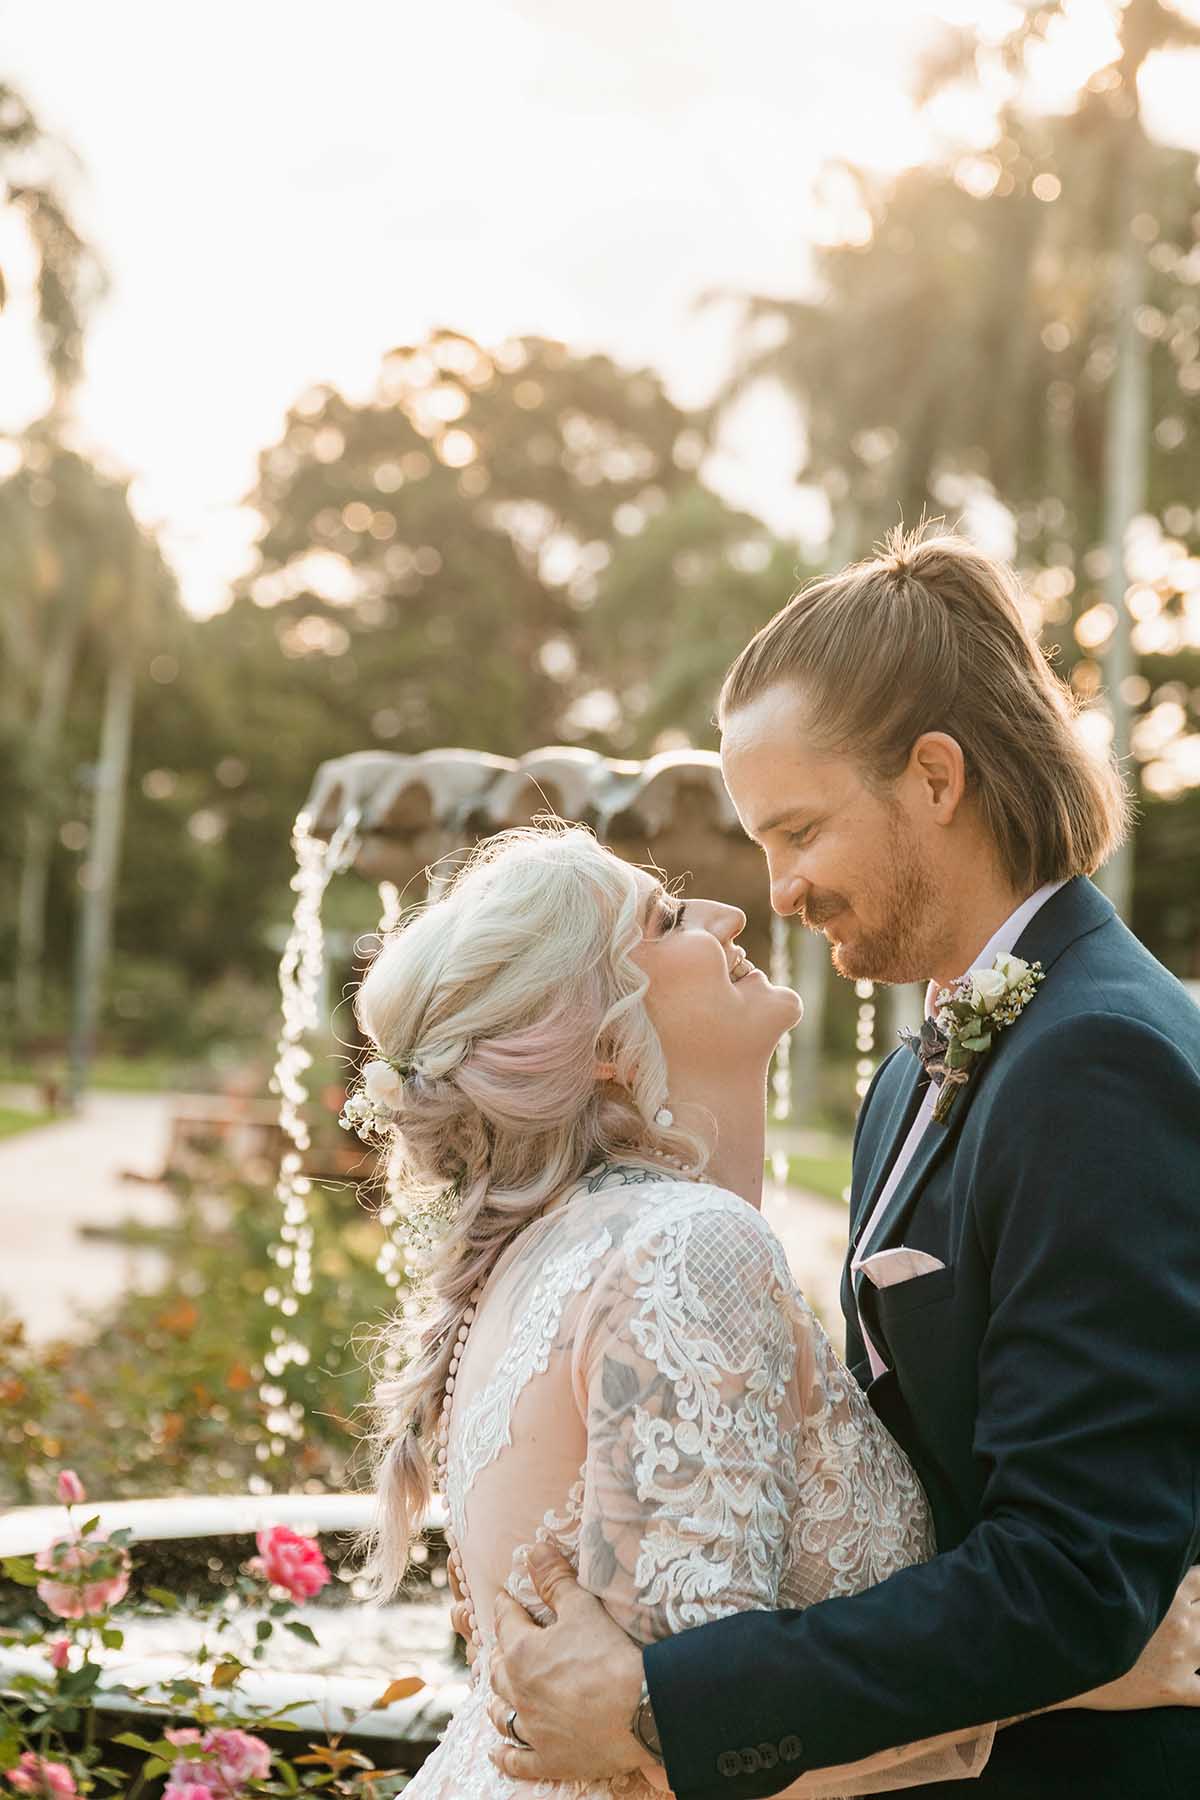 Wedding Photography - couple embracing close up